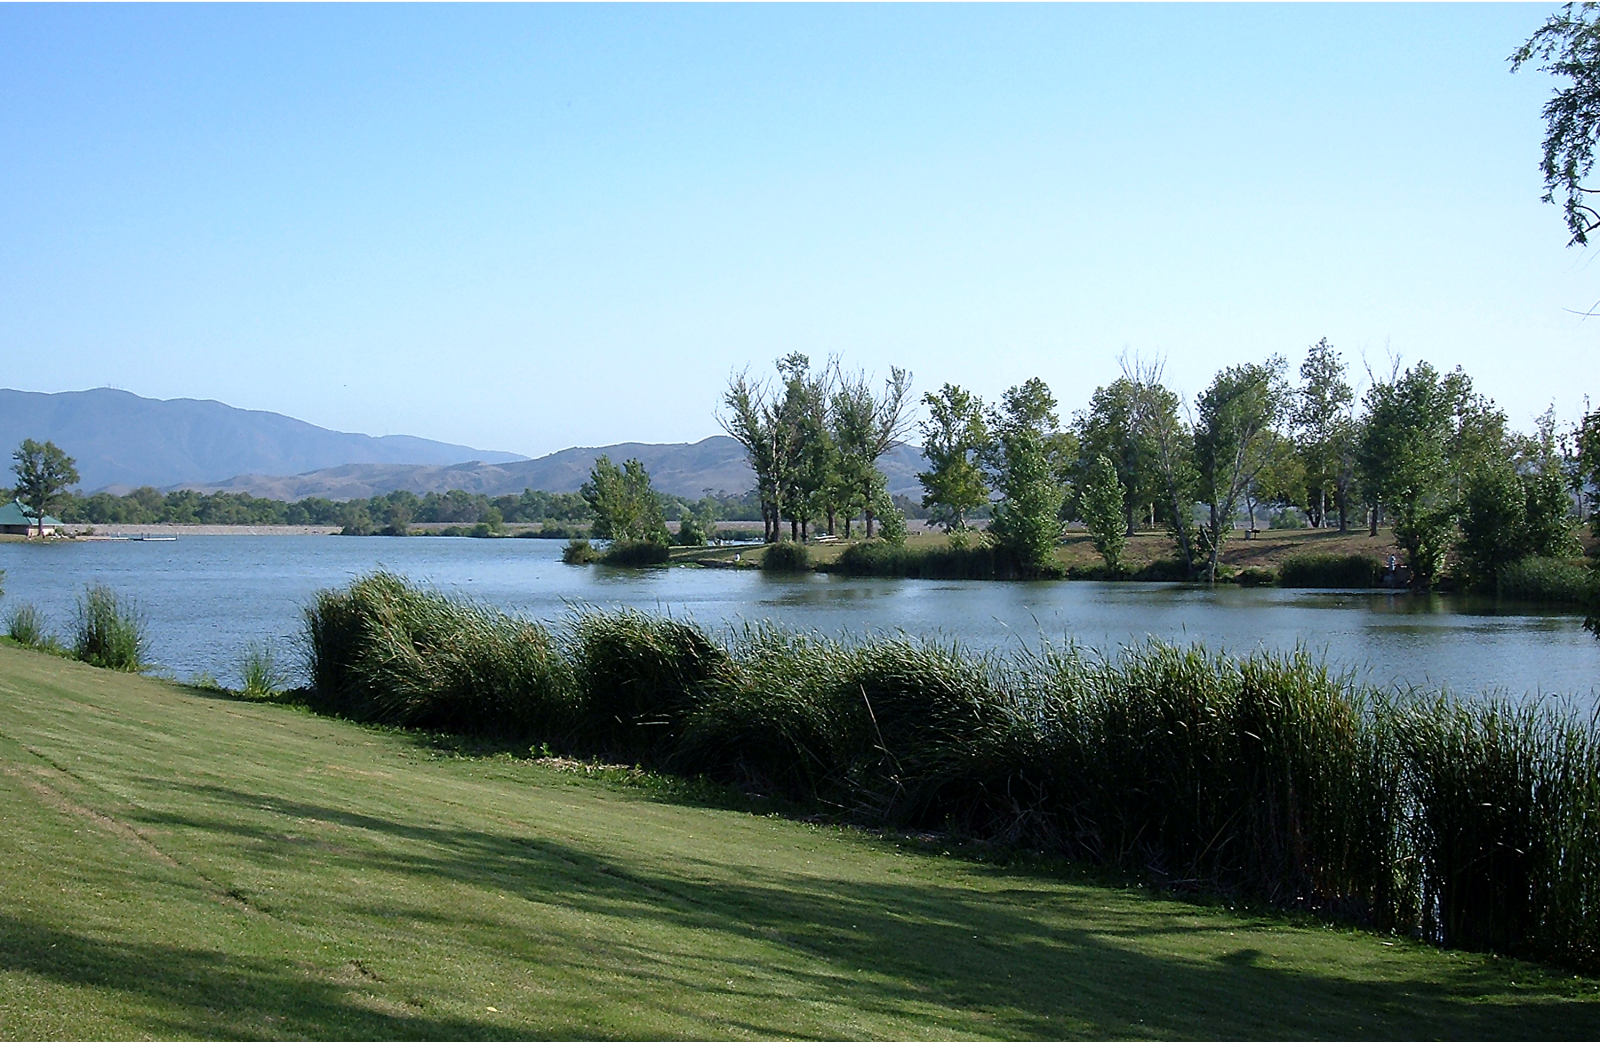 A side view of Prado lake with green grass.